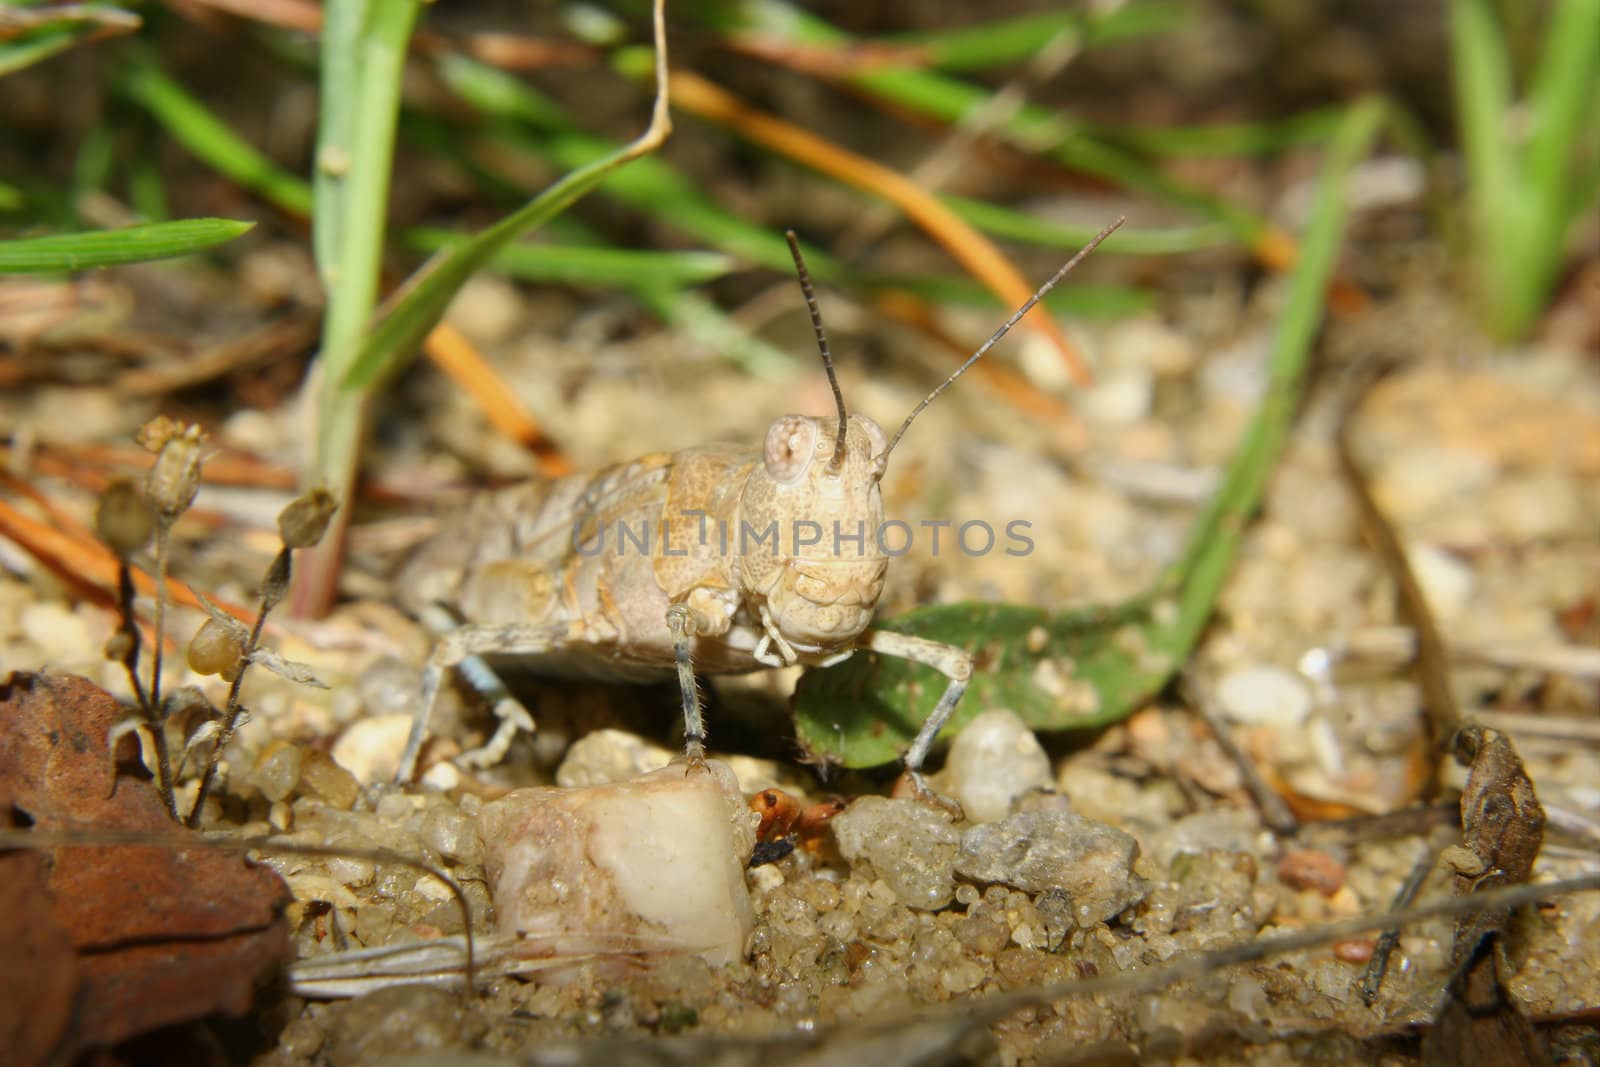 Red Sand Grasshopper (Sphingonotus caerulans) by tdietrich